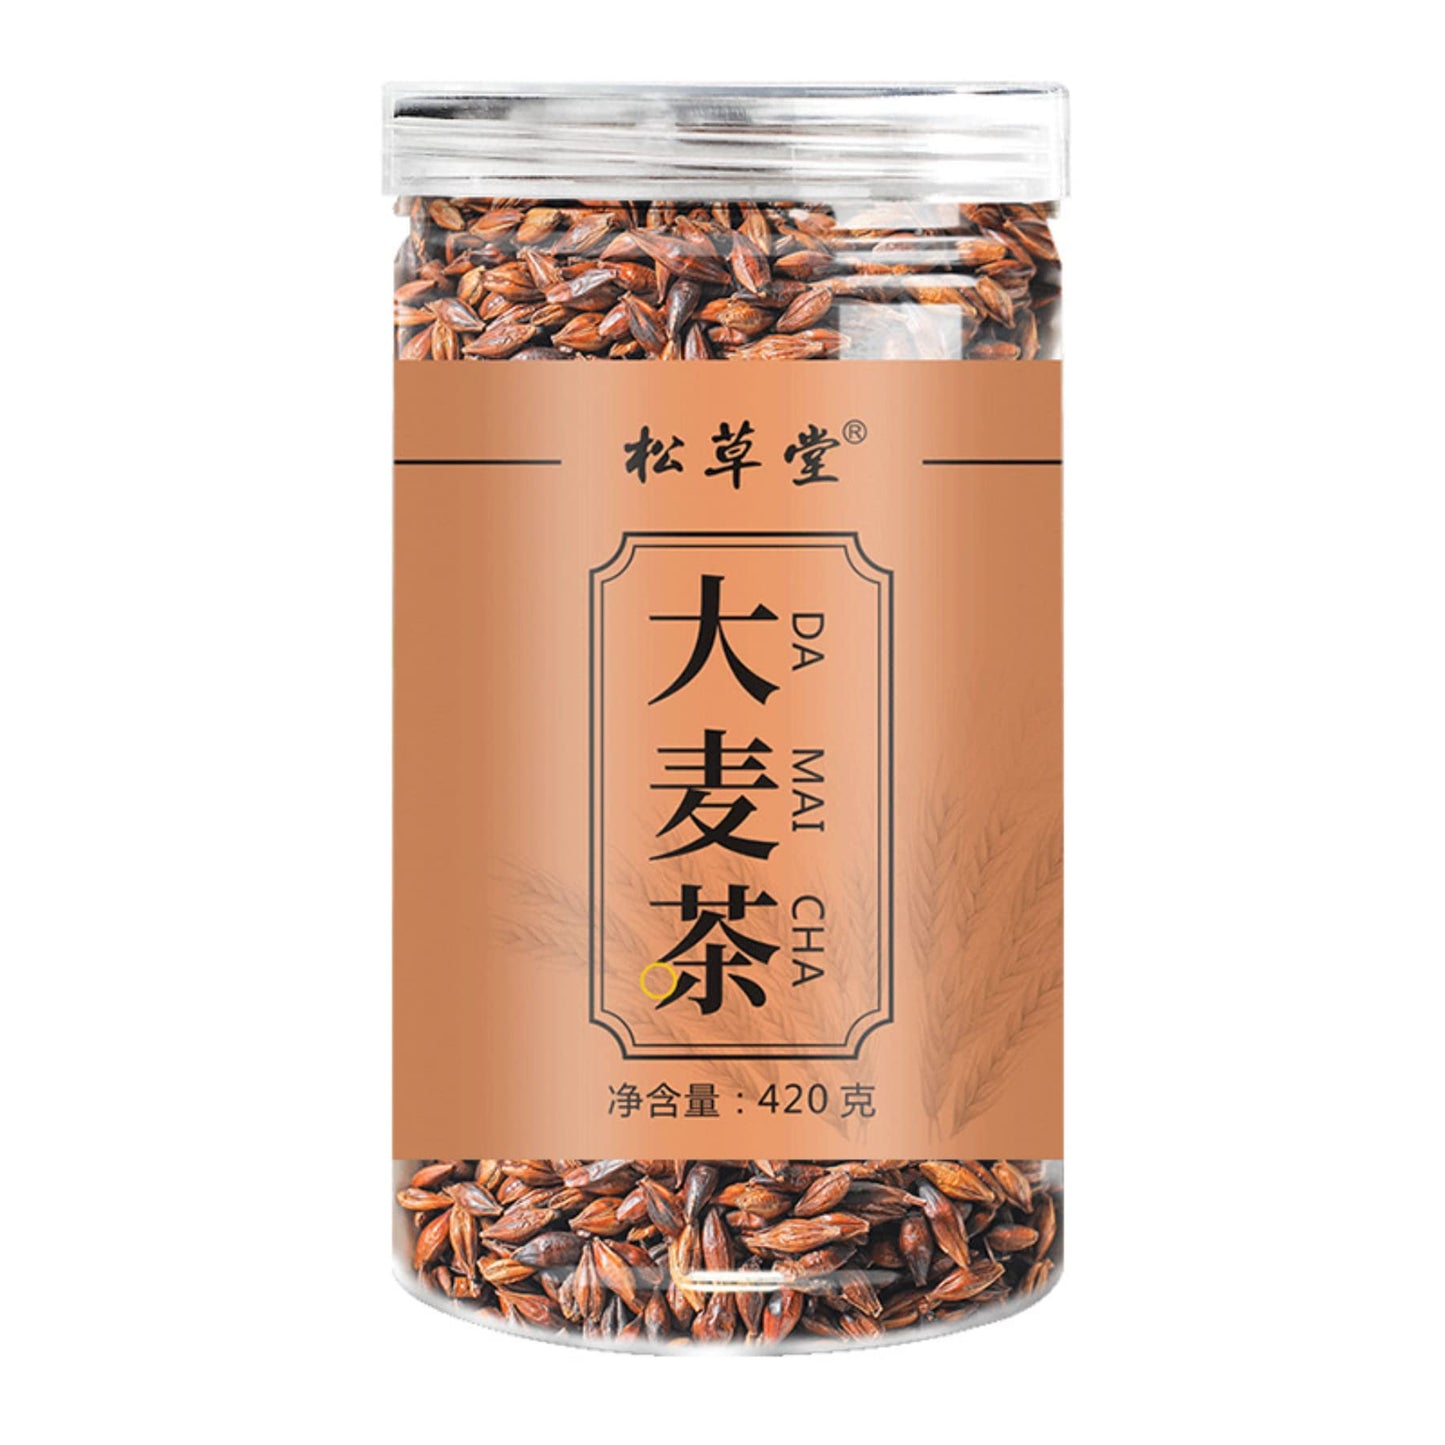 Herbal Tea Barley Tea Canned Original Roasted Strong Aroma Fried Cooked Barley Tea 420g 罐装原味烘培浓香型大麦茶420g